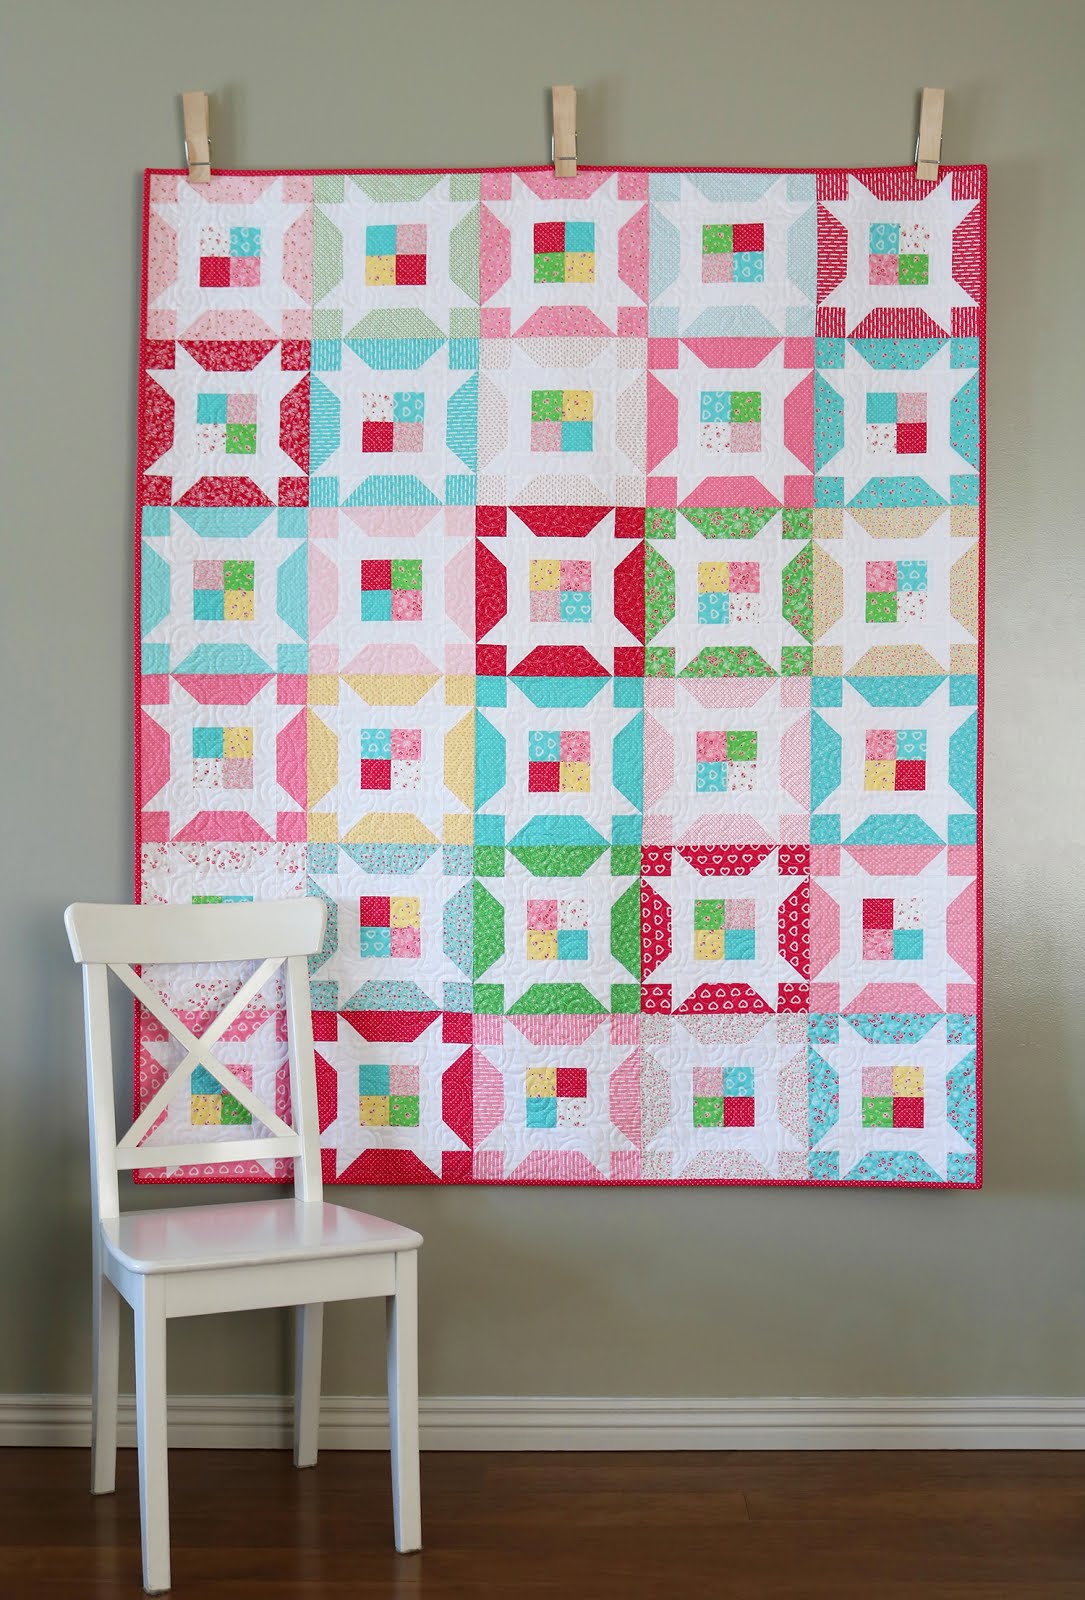 A Bright Corner: 15 Favorite Free Baby Quilt Patterns